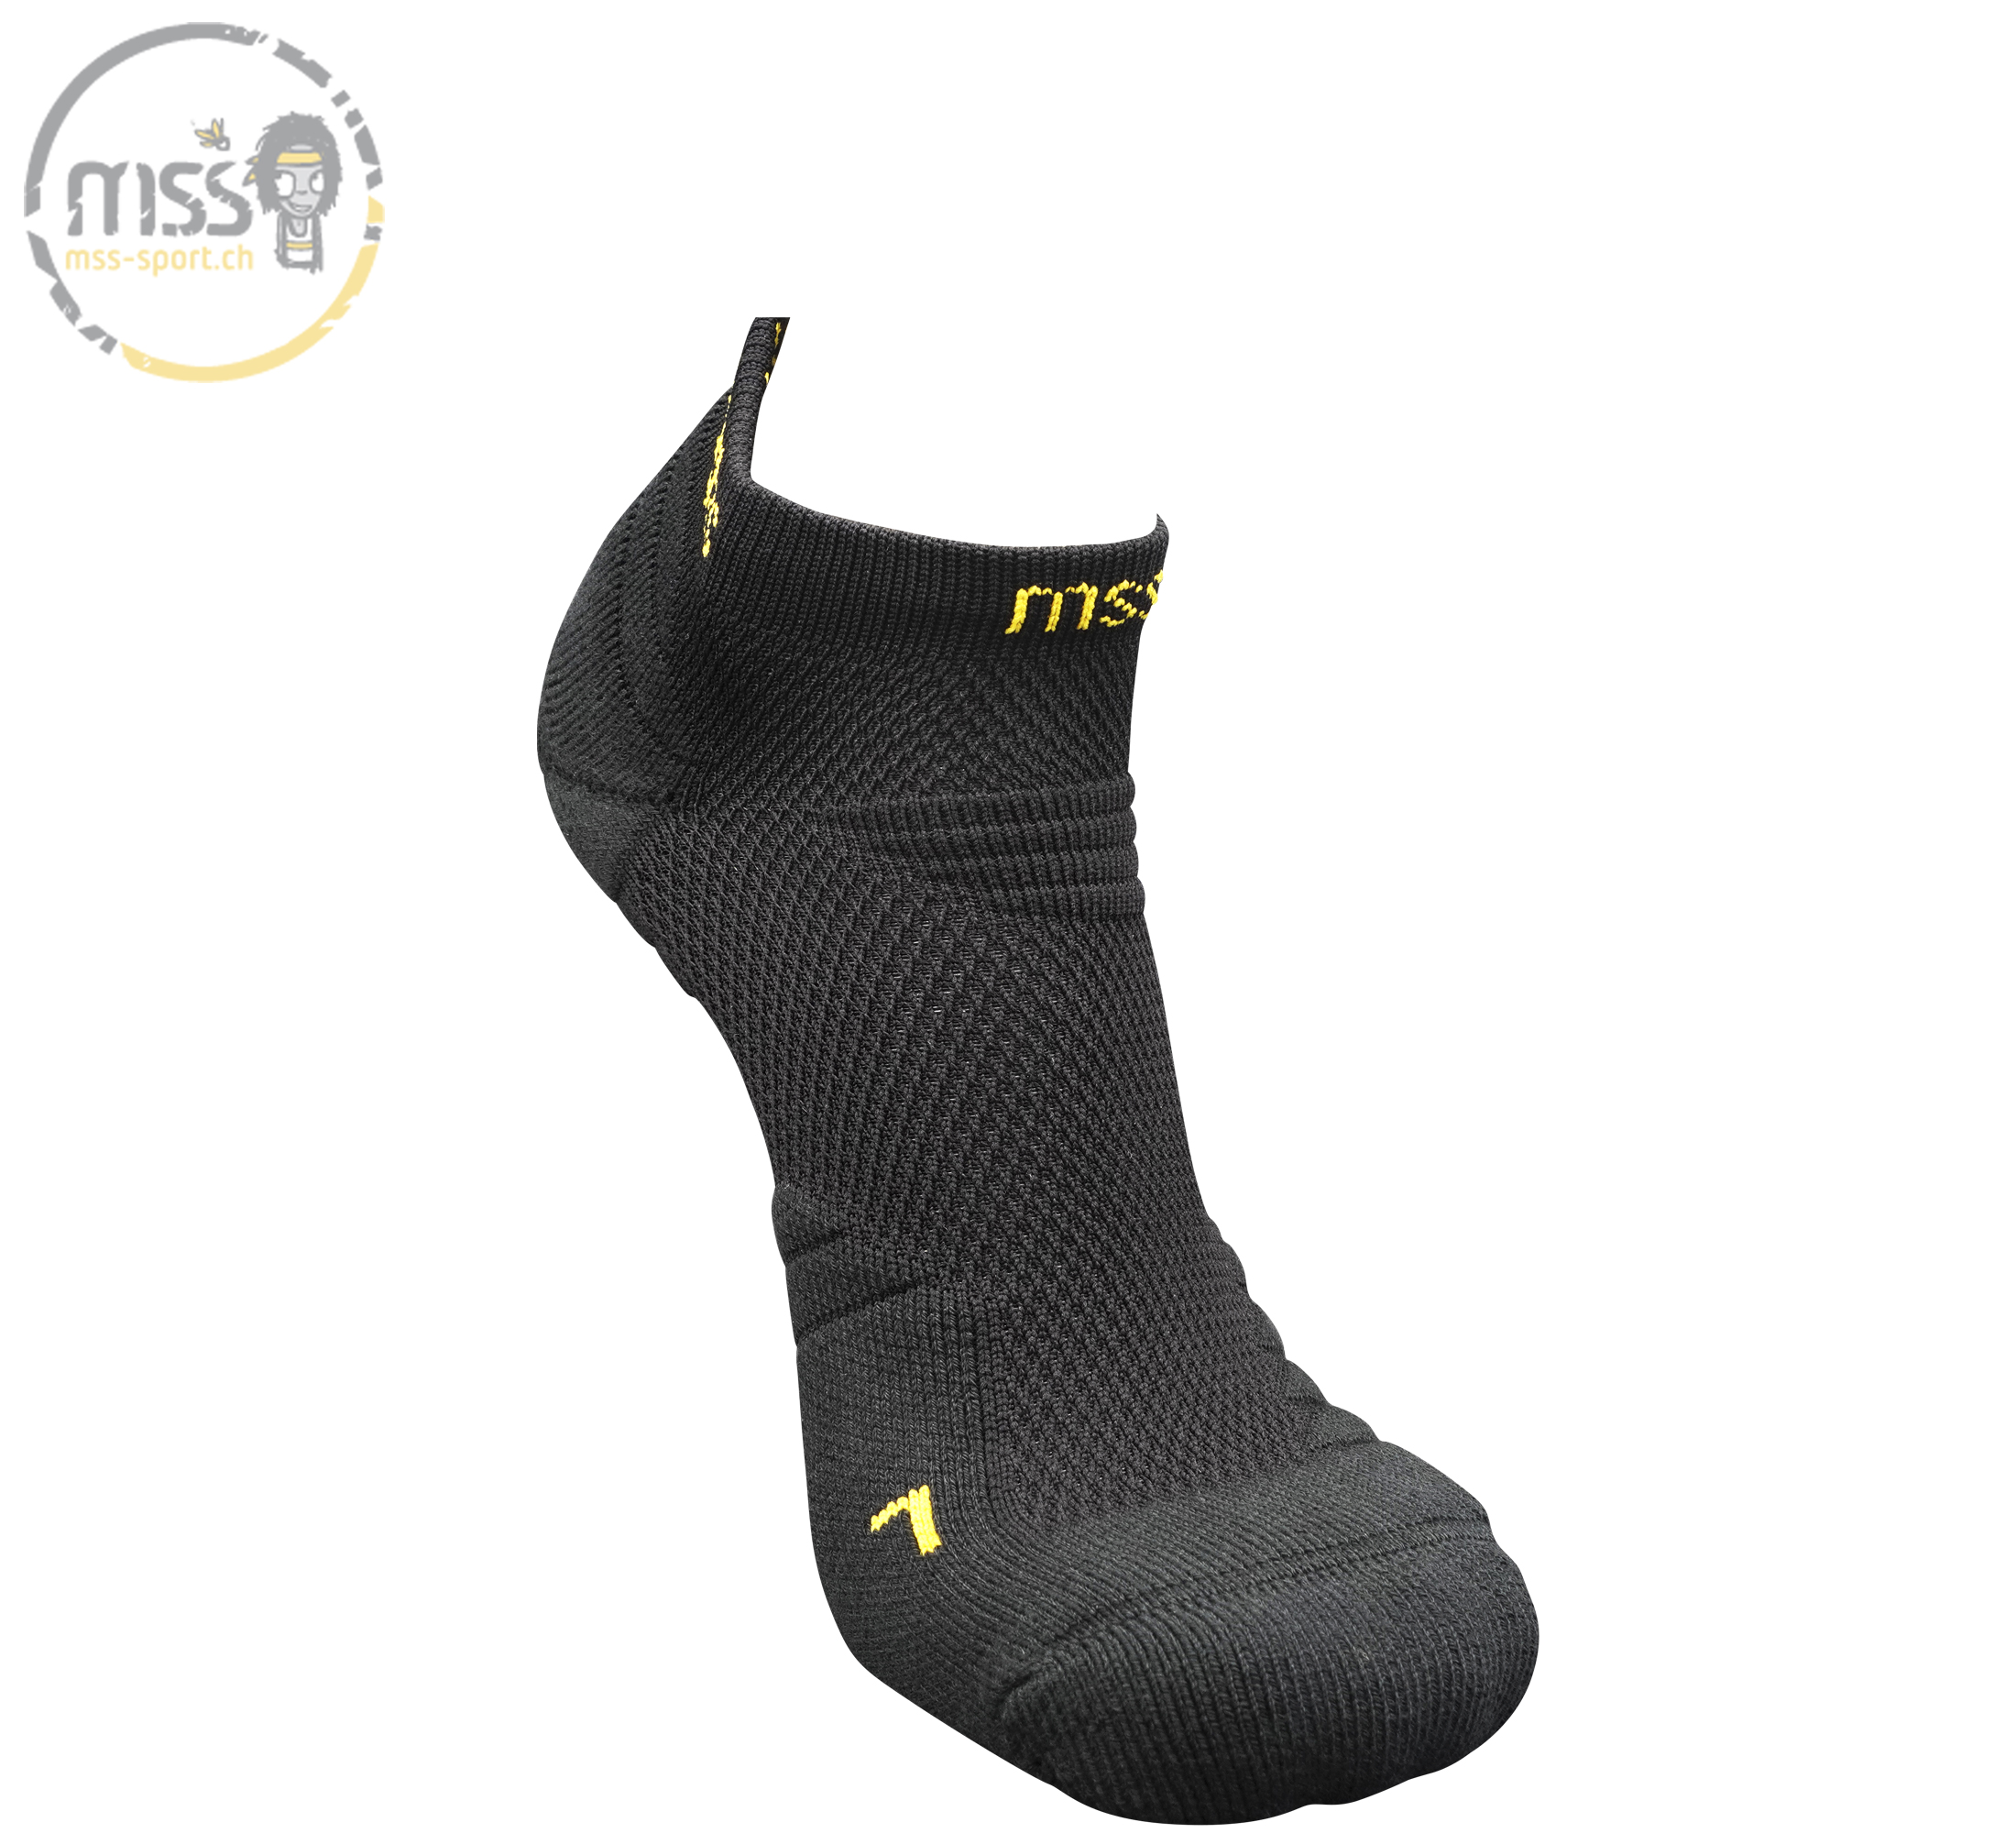 mss-socks Smash 5300 low Lady black